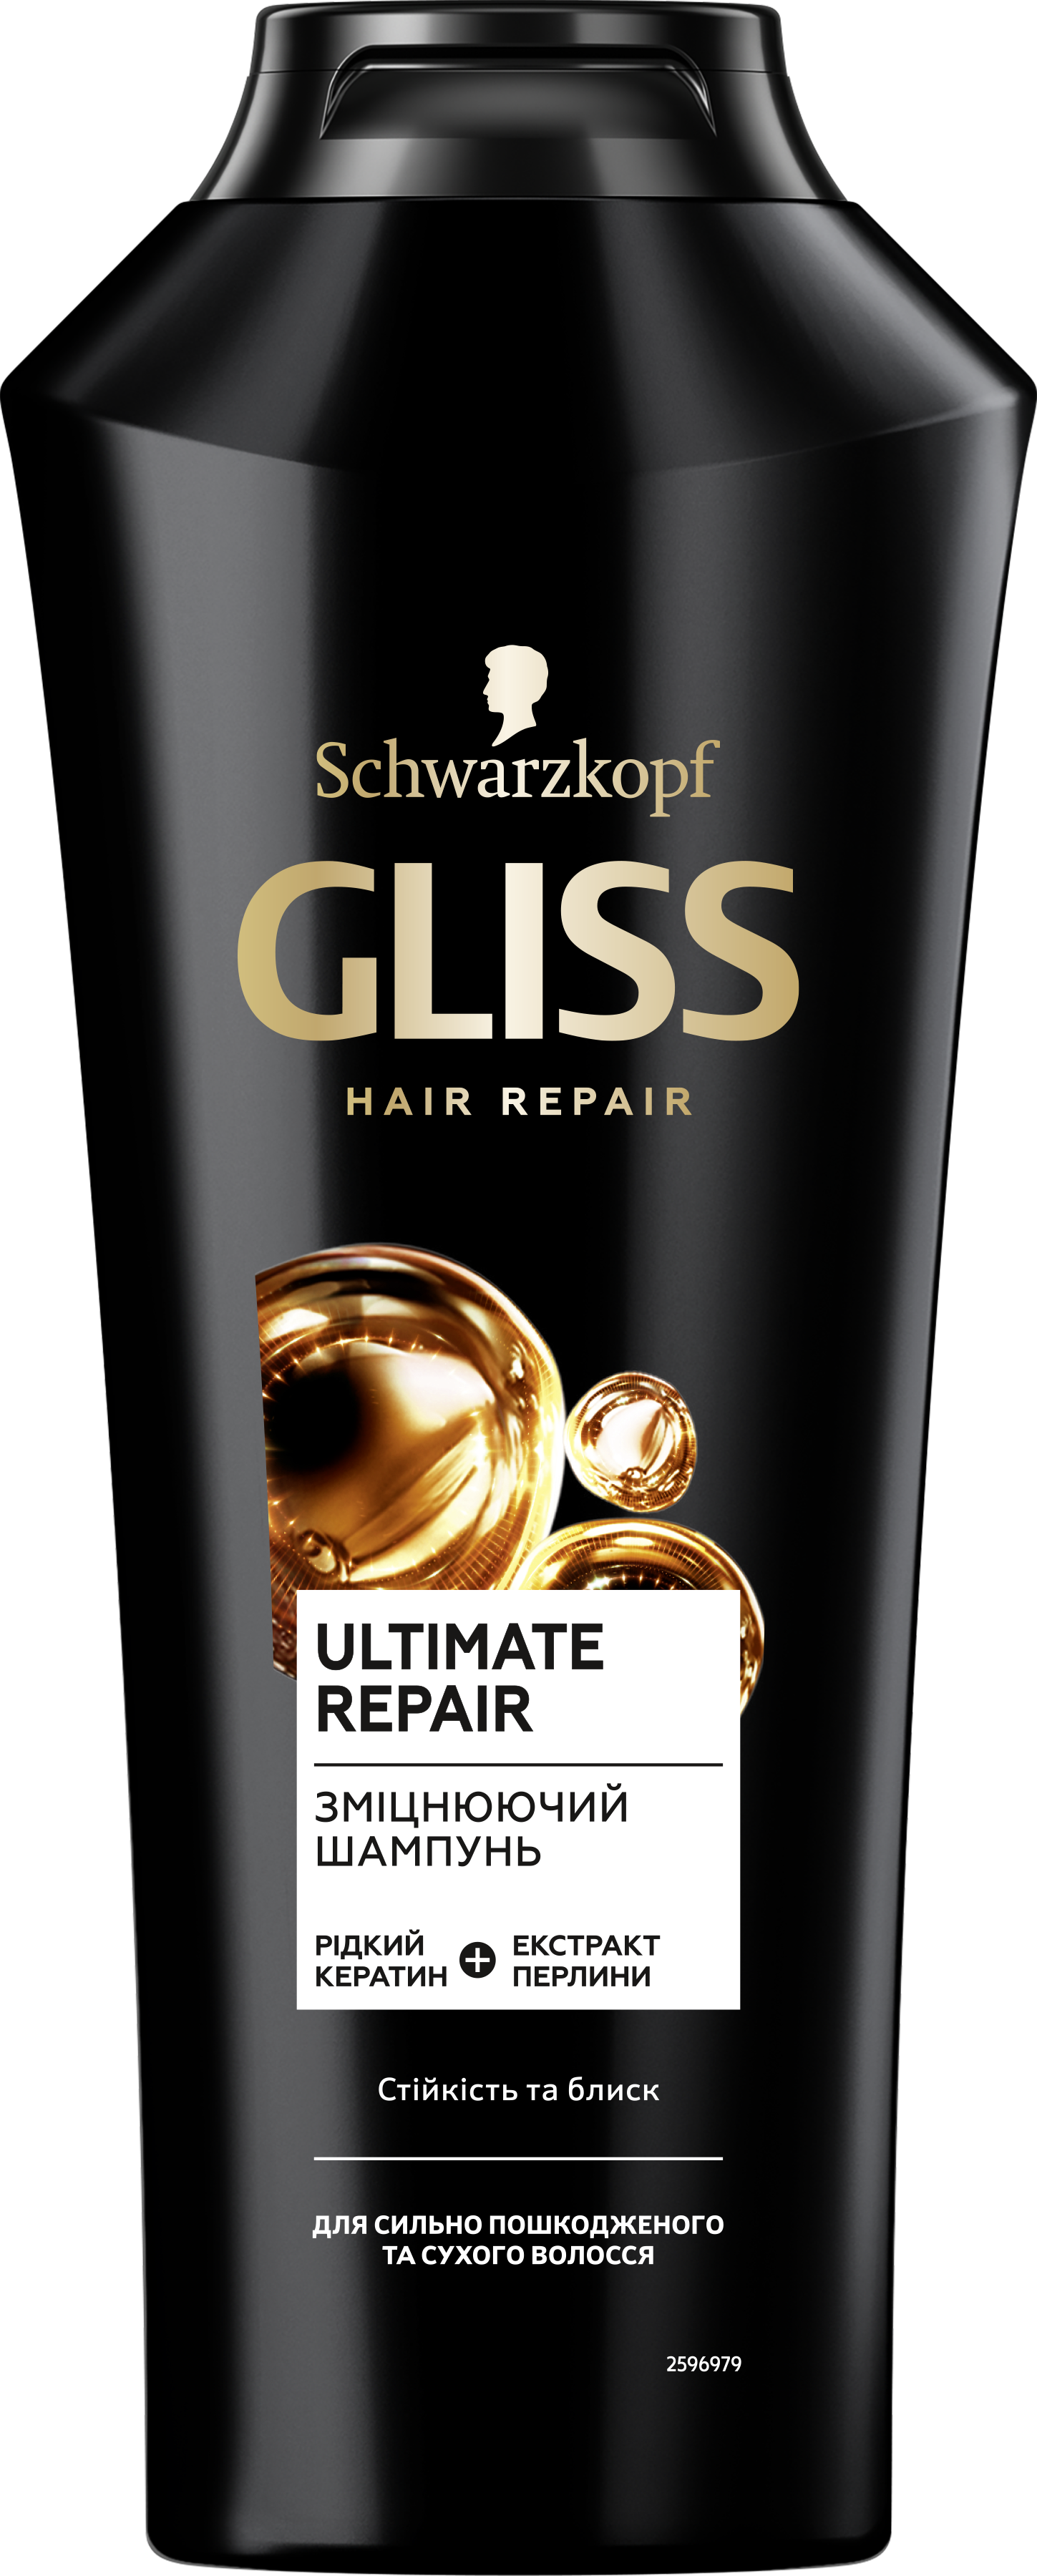 Подарочный набор Gliss Ultimate Repair: Шампунь, 400 мл + Бальзам, 200 мл + Масло для волос, 75 мл - фото 6